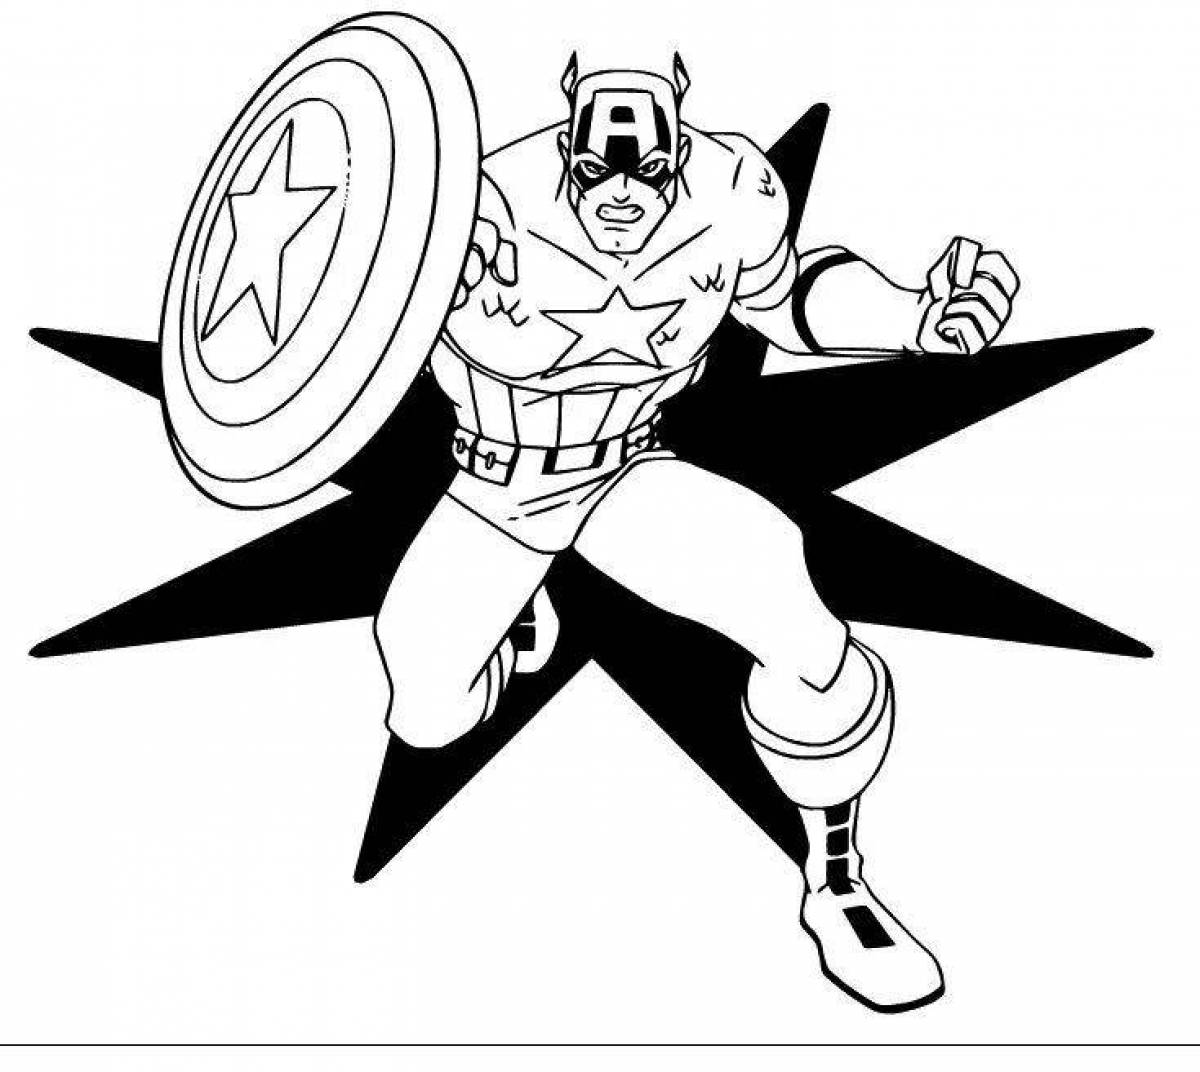 Majestic Captain America's Shield coloring page